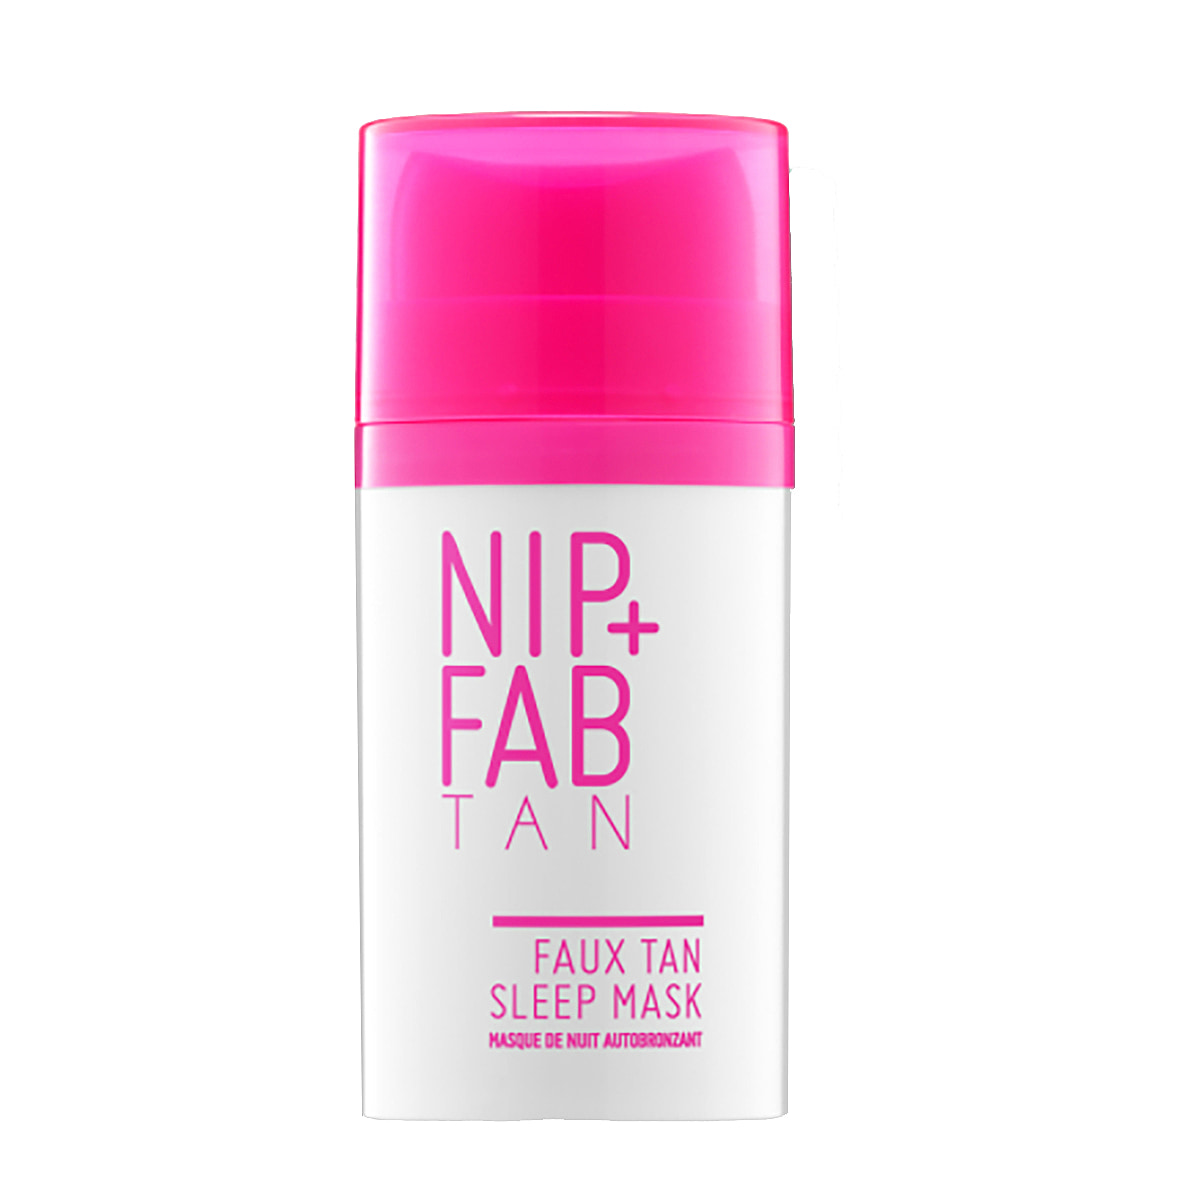 NIP+FAB: Faux Tan Overnight Sleep Mask